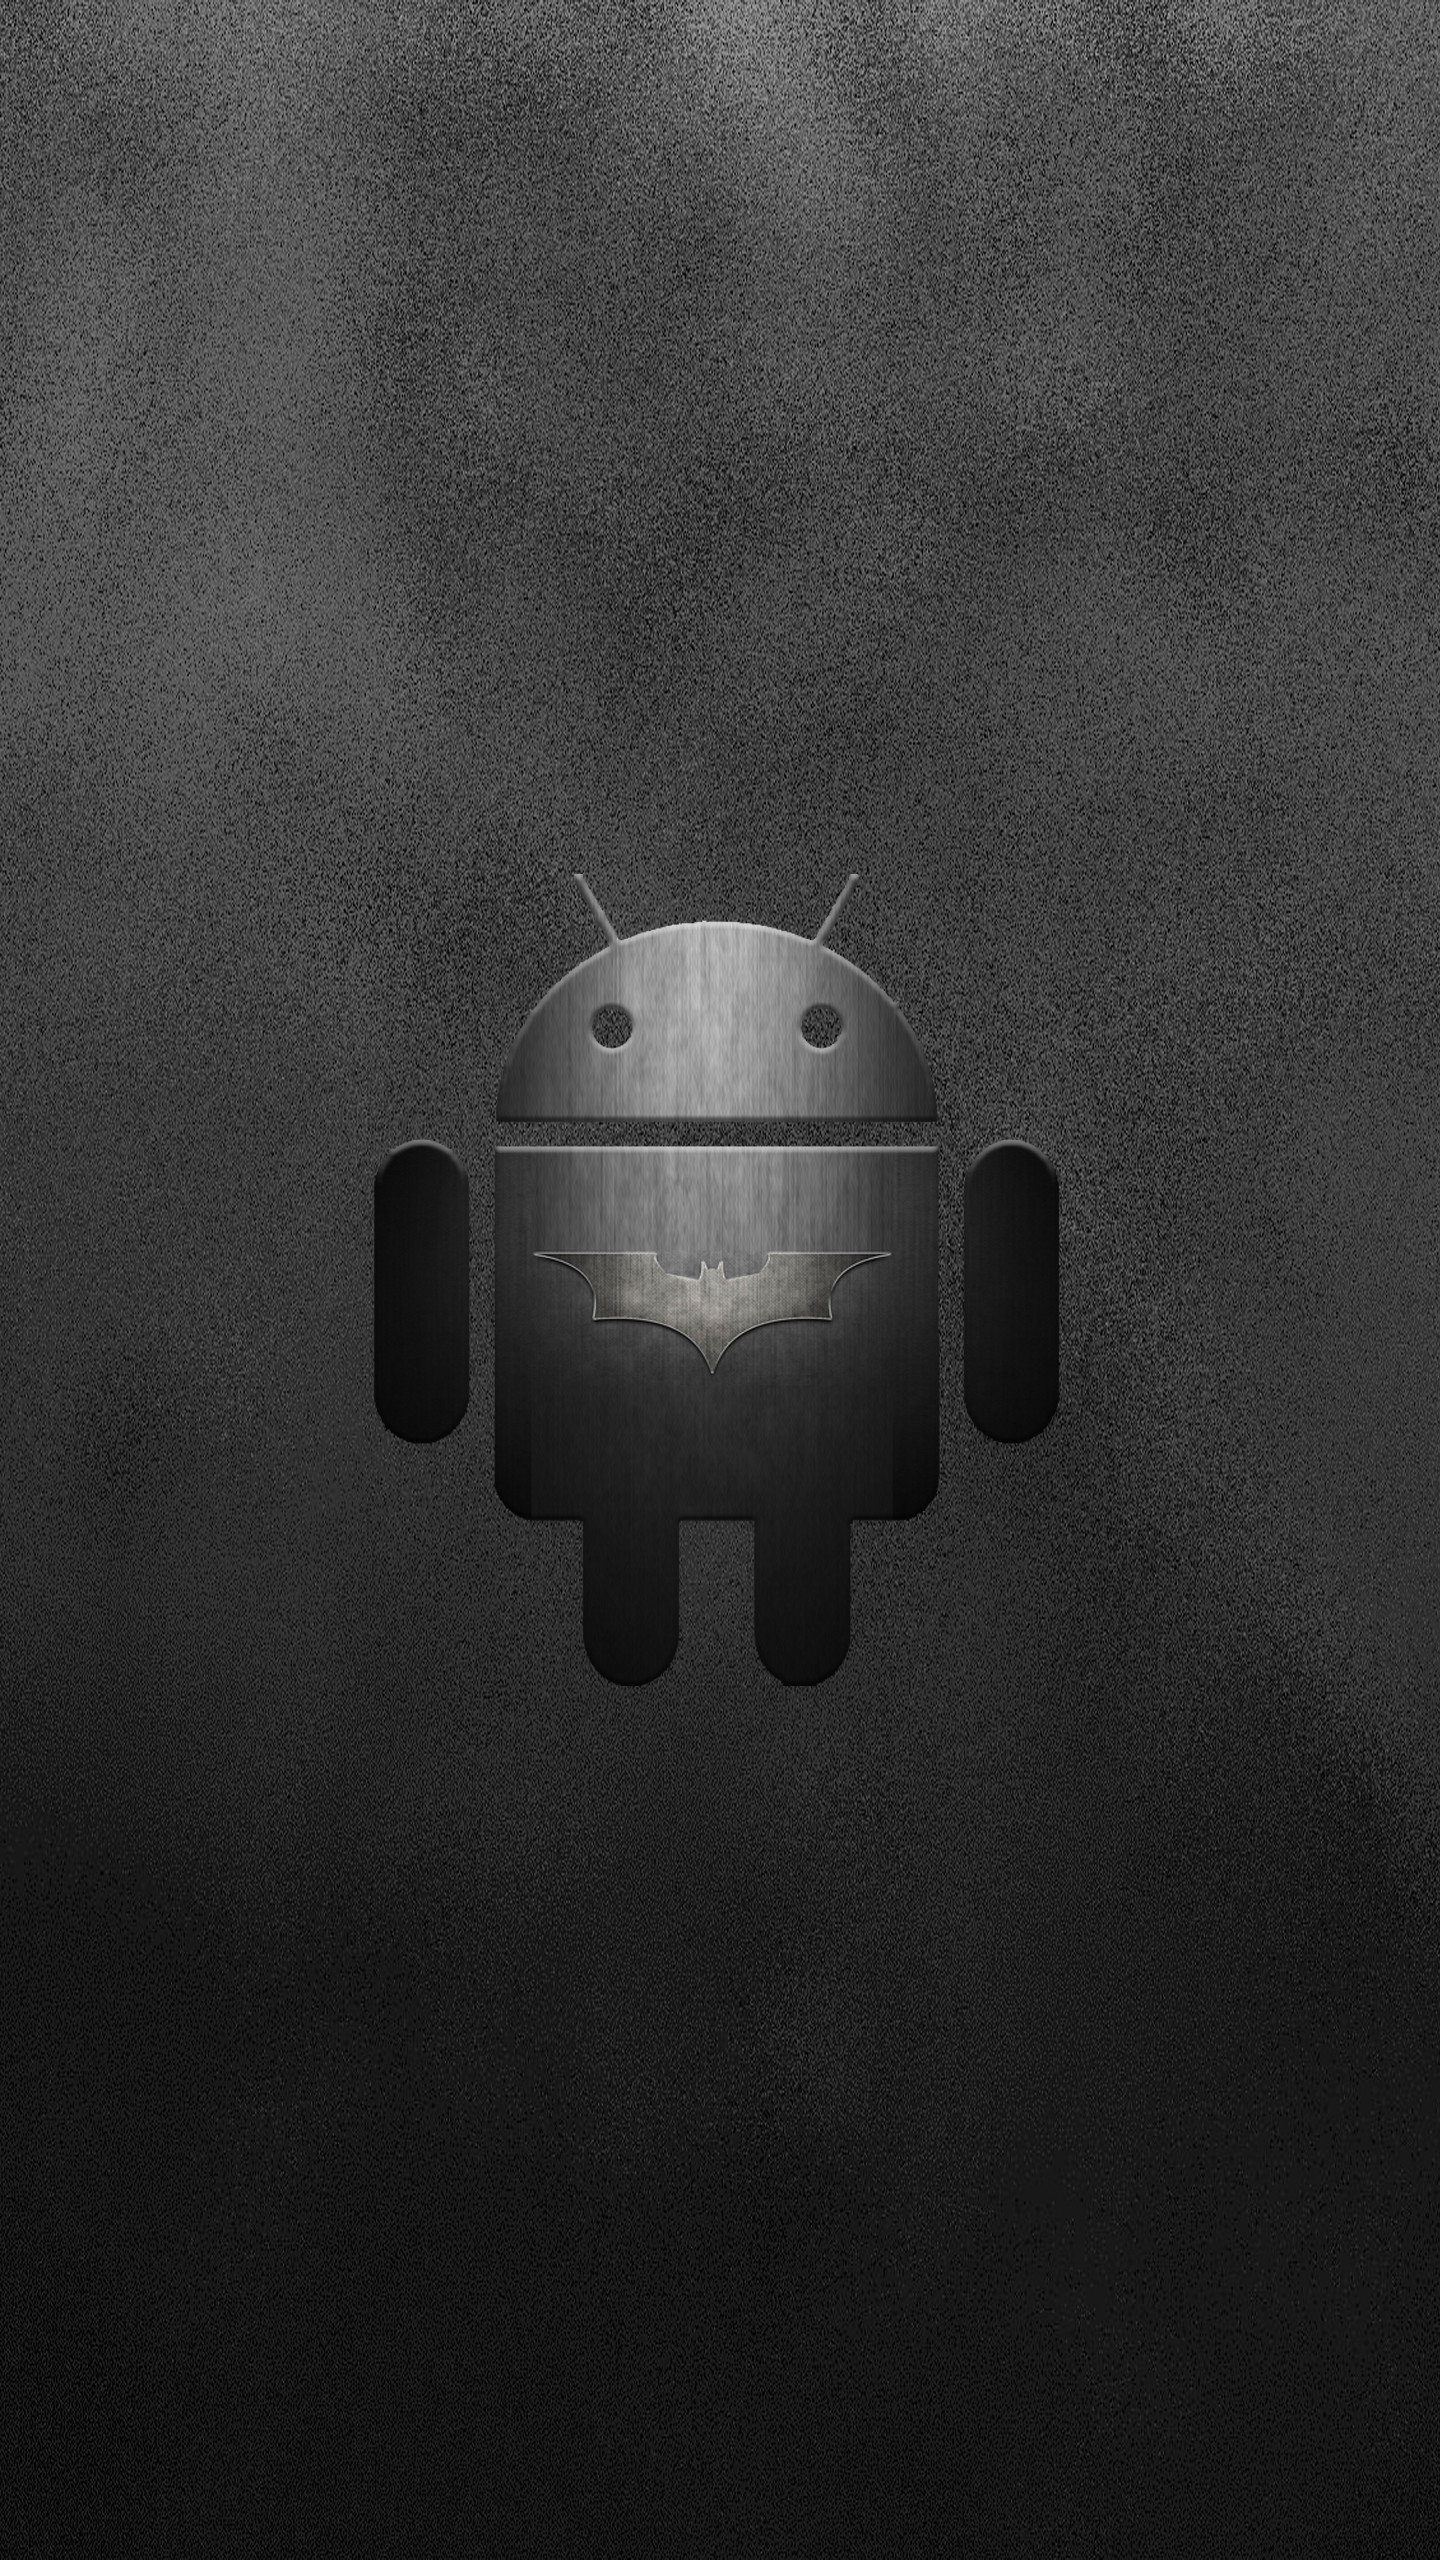 1440x2560 Download the Android Batman Bugdroid wallpaper